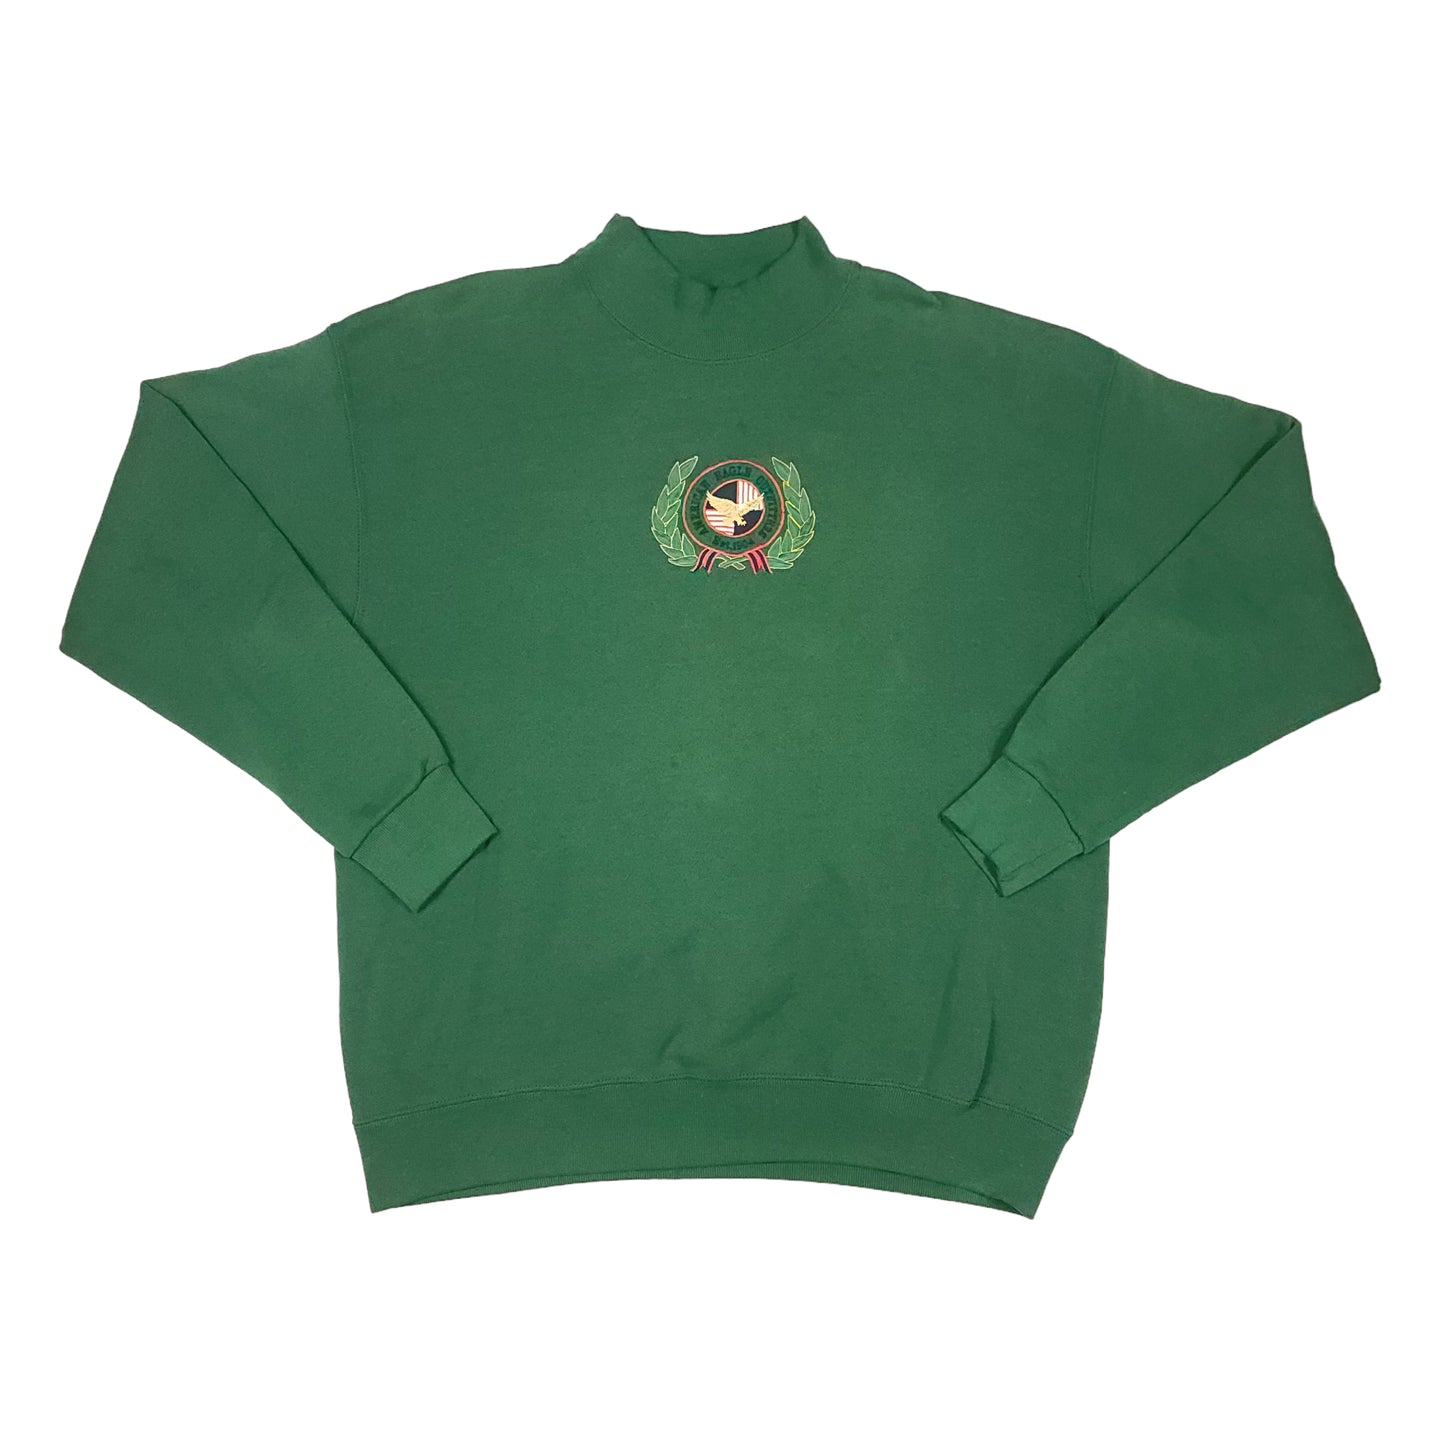 Vintage American Eagle Outfitters Green Sweatshirt